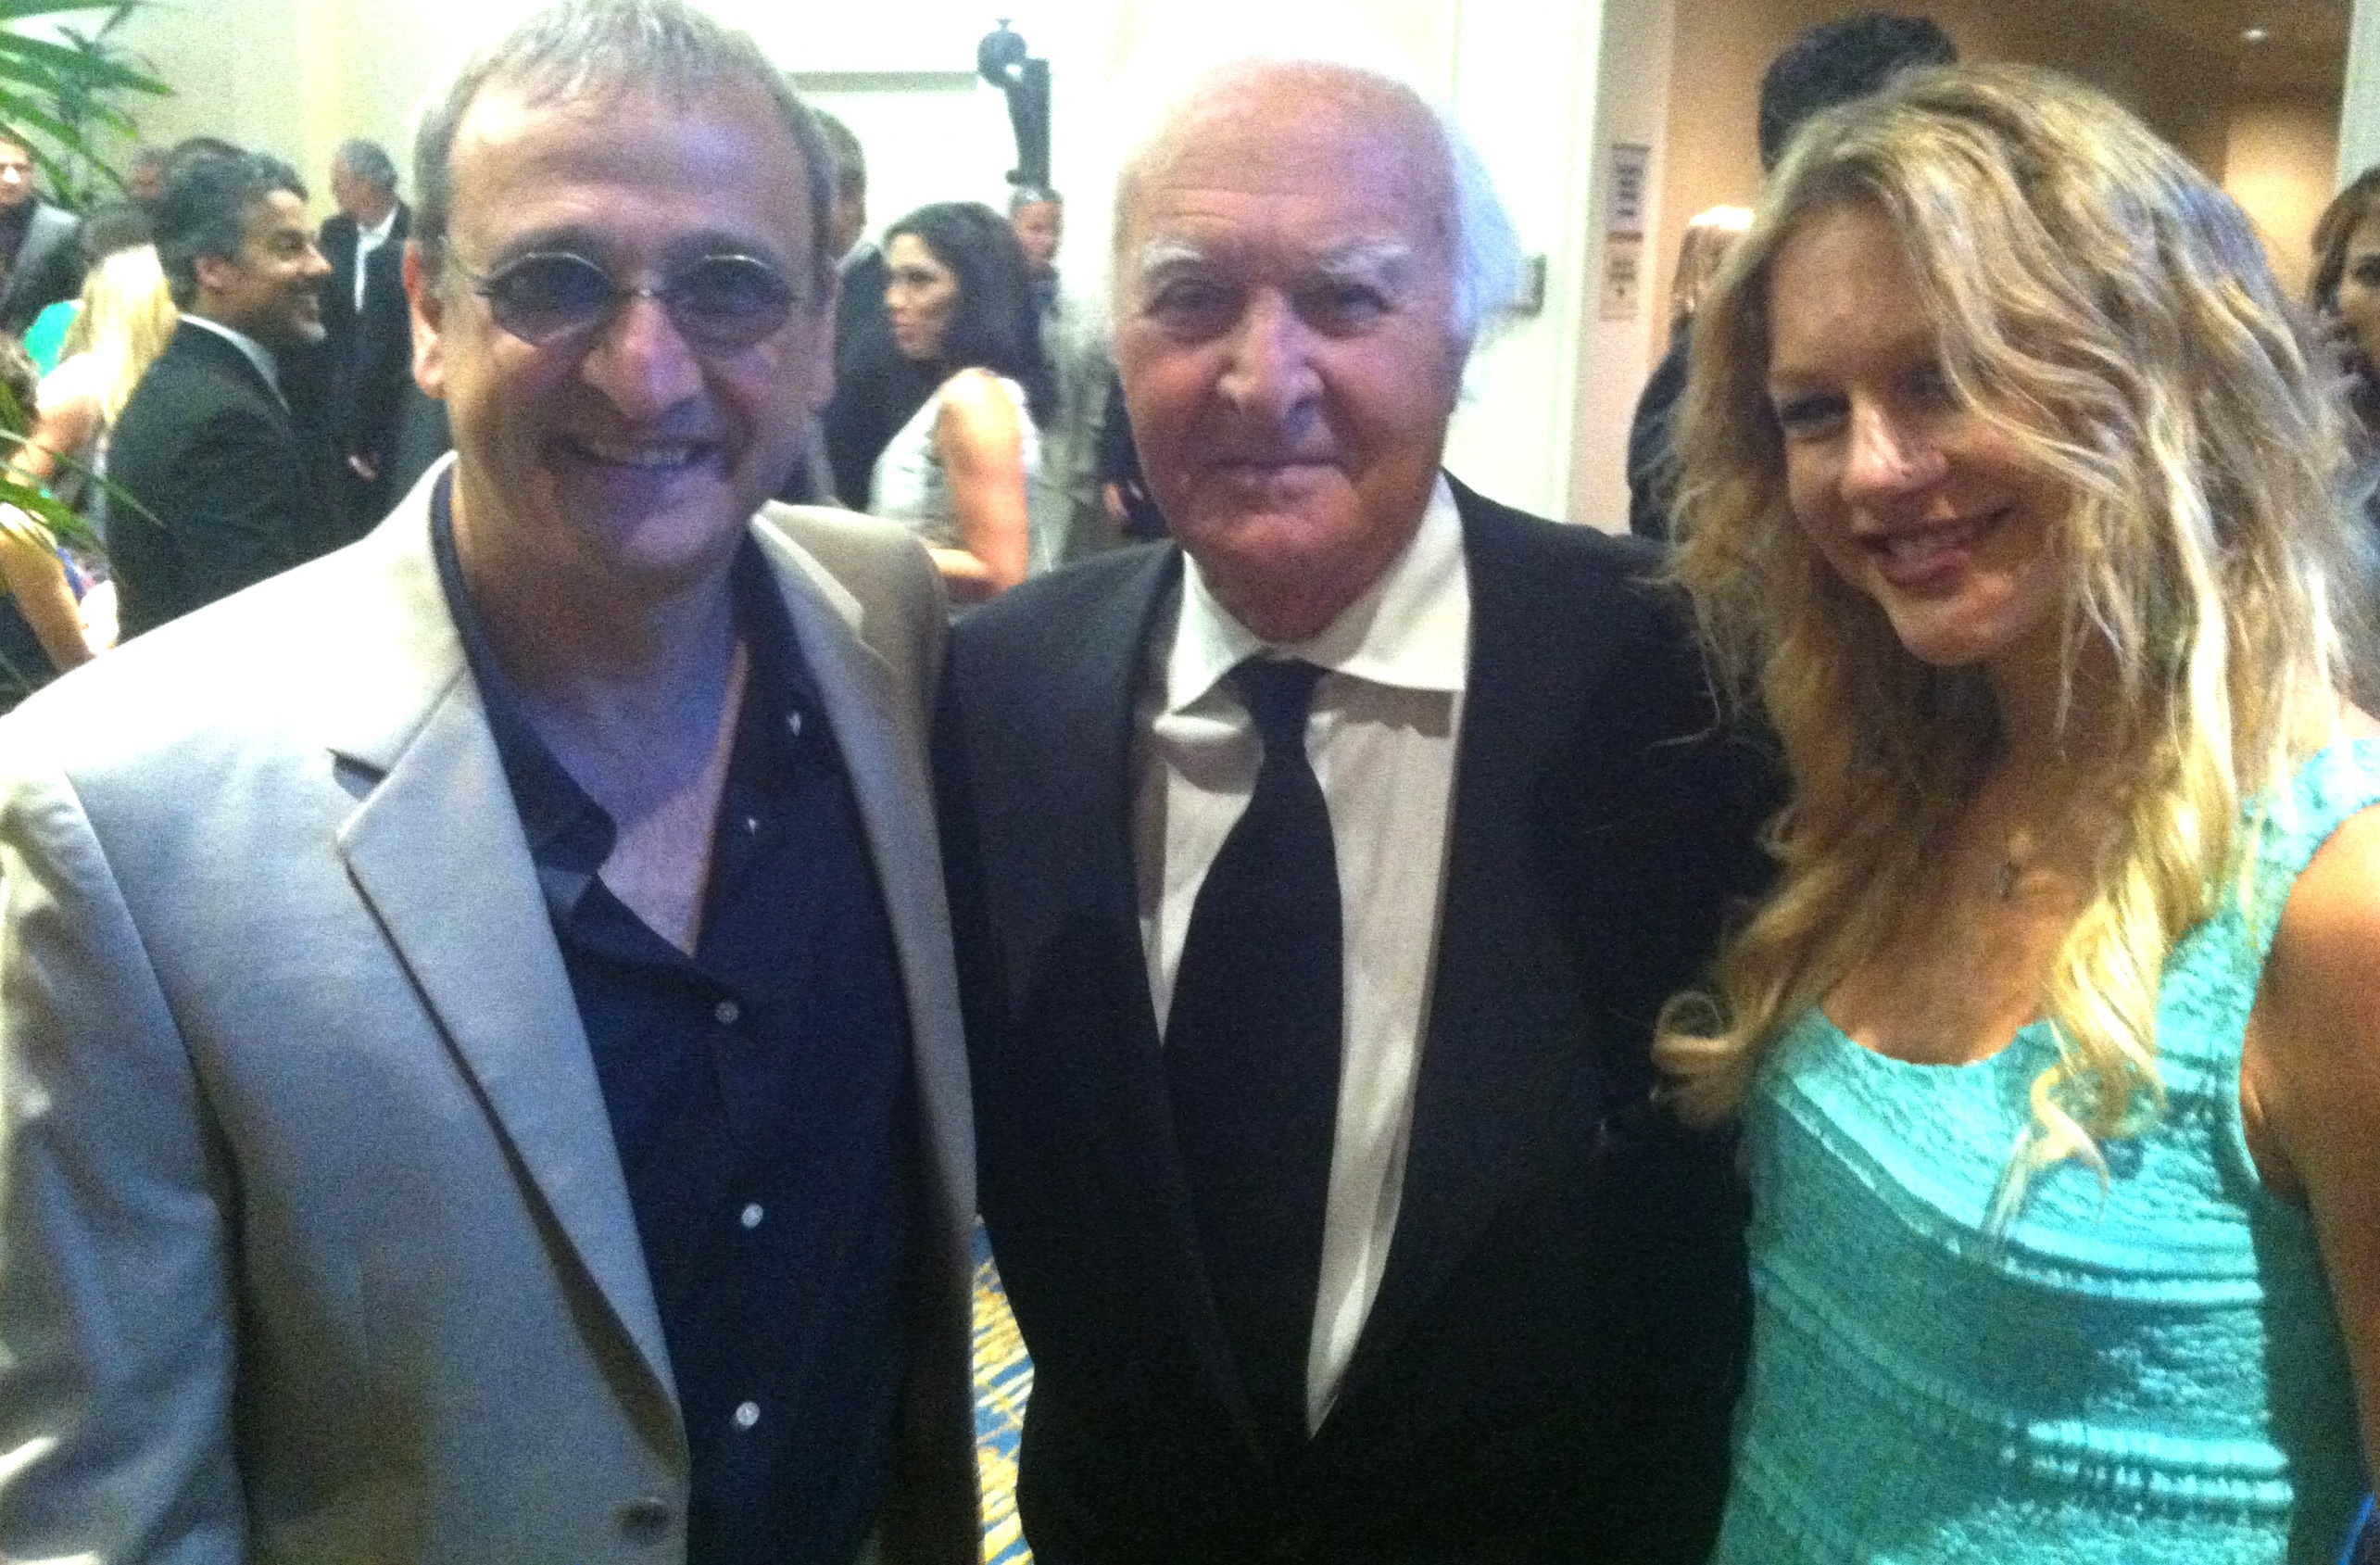 2013 Aof Awards with Robert Loggia and Ursula Maria